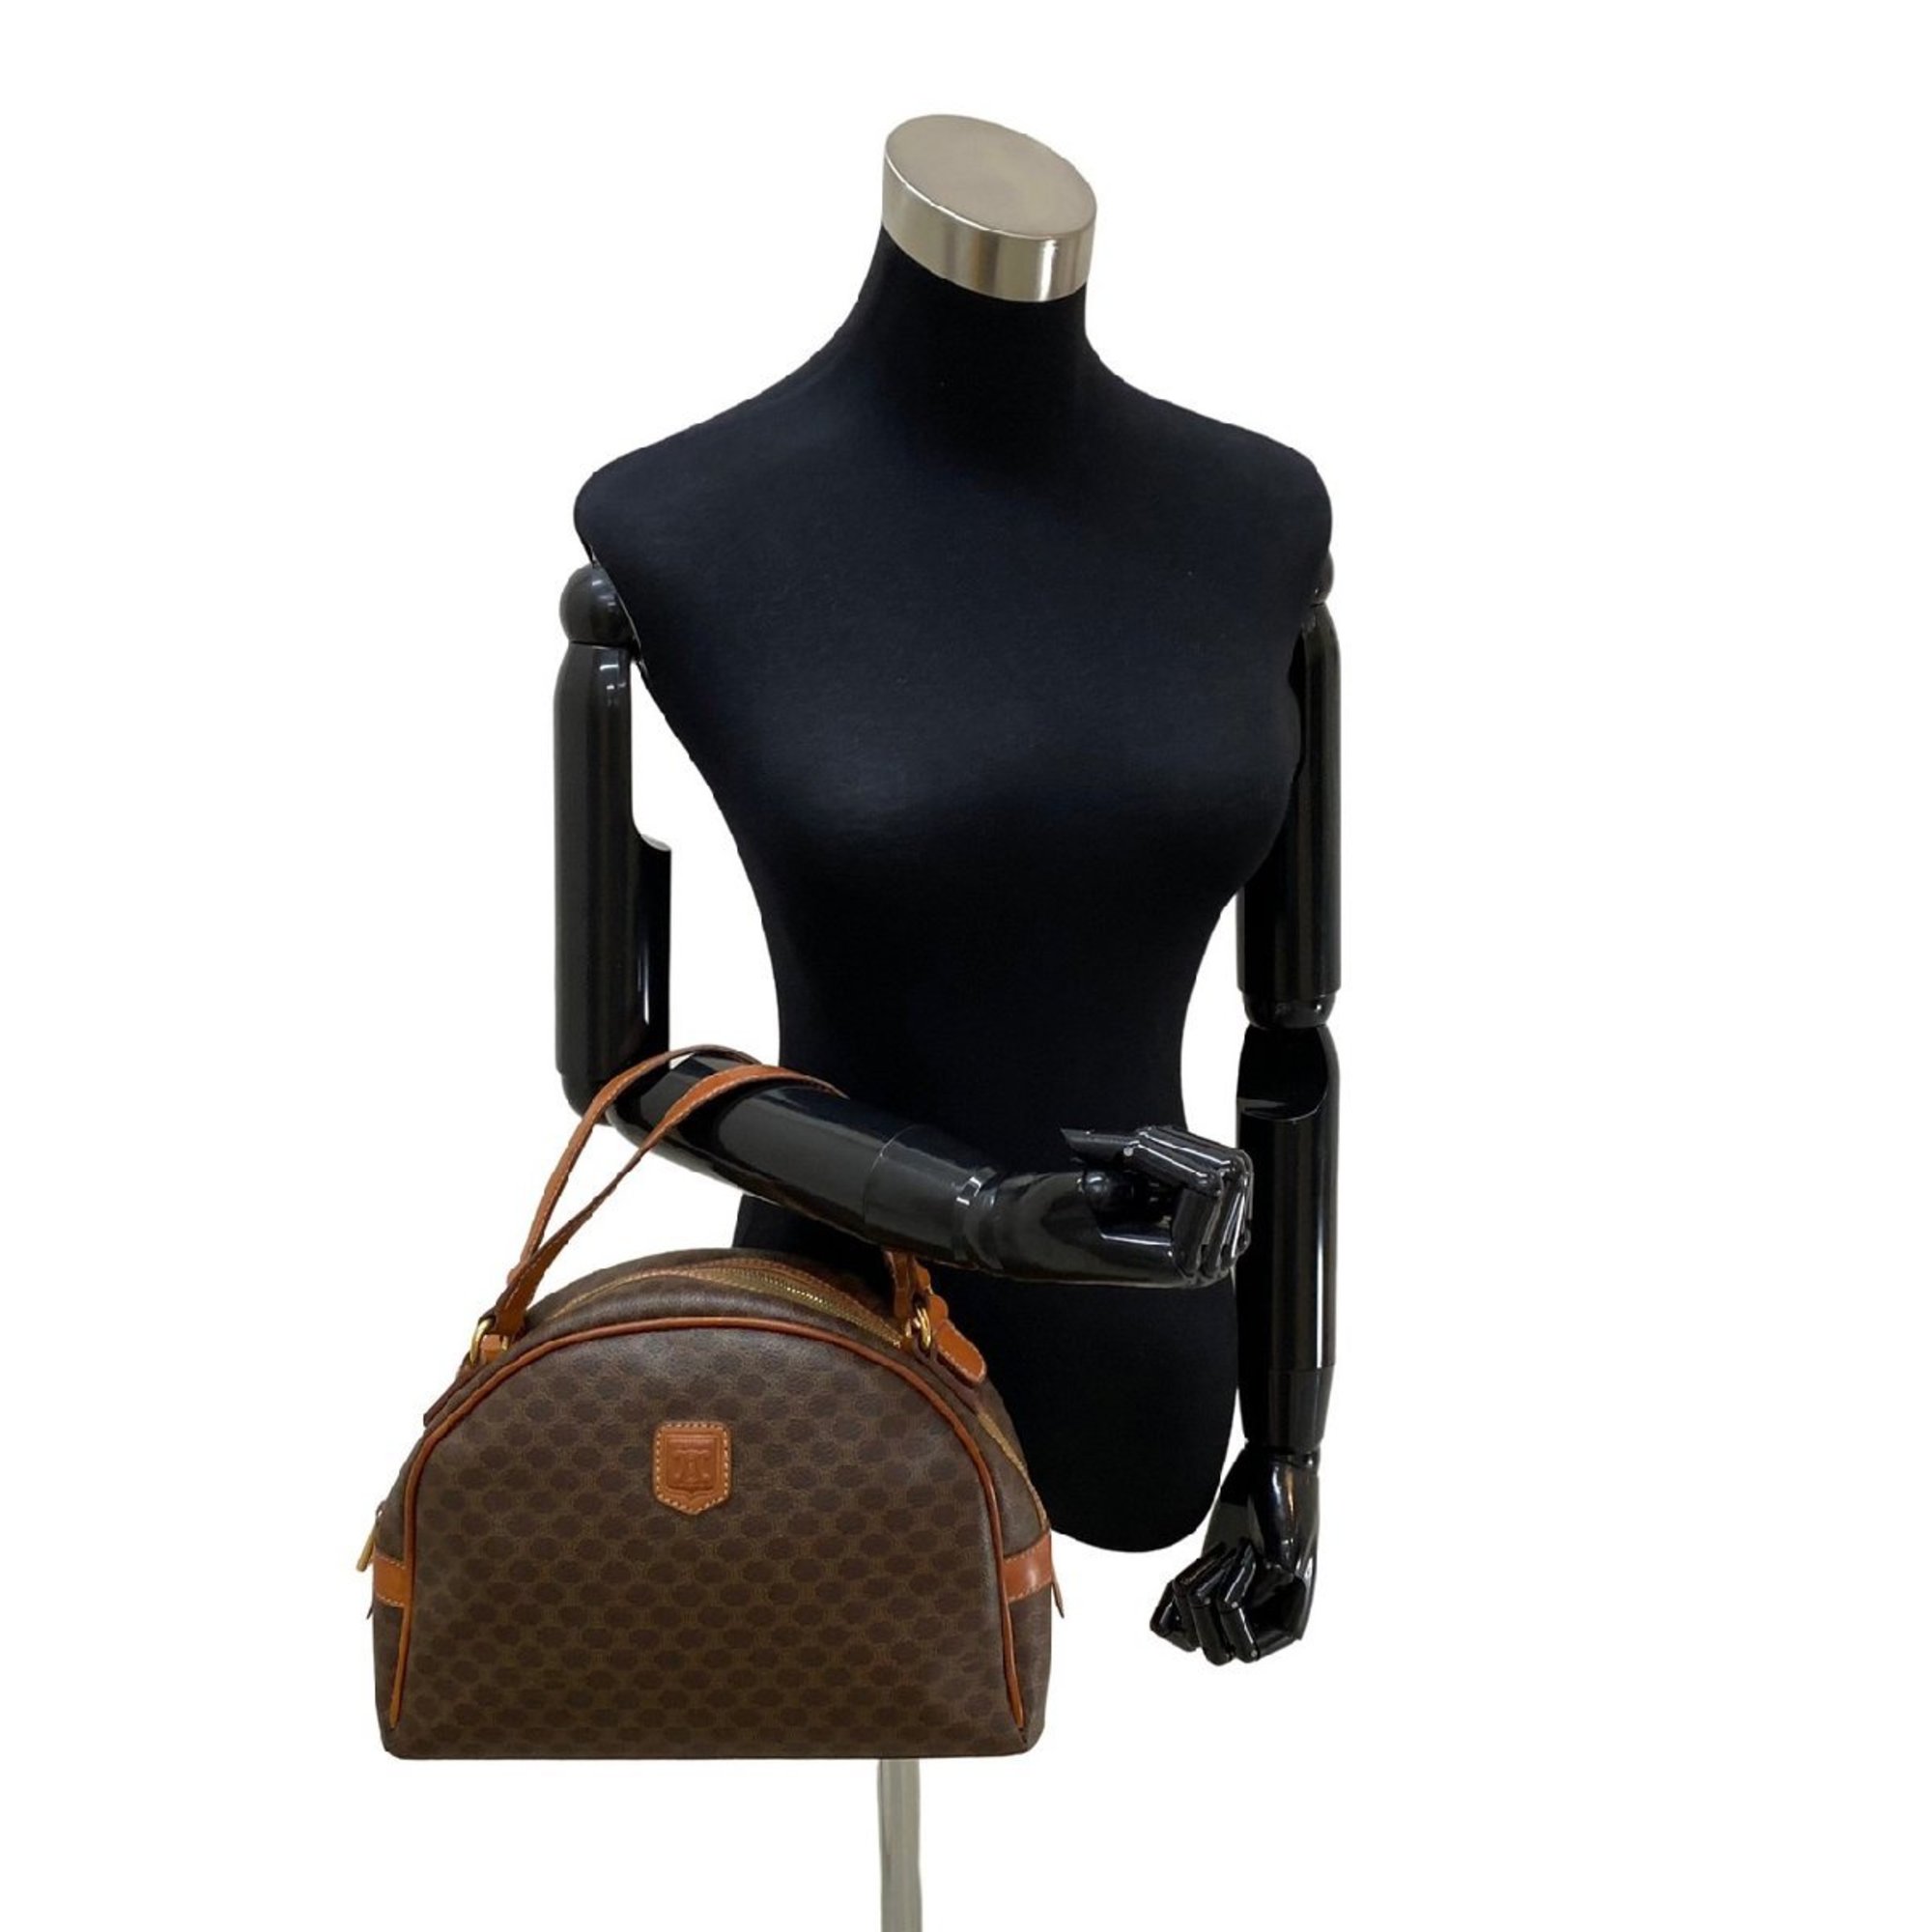 CELINE Vintage Macadam Blason Triomphe Pattern Logo Leather Genuine Handbag Mini Tote Bag Brown